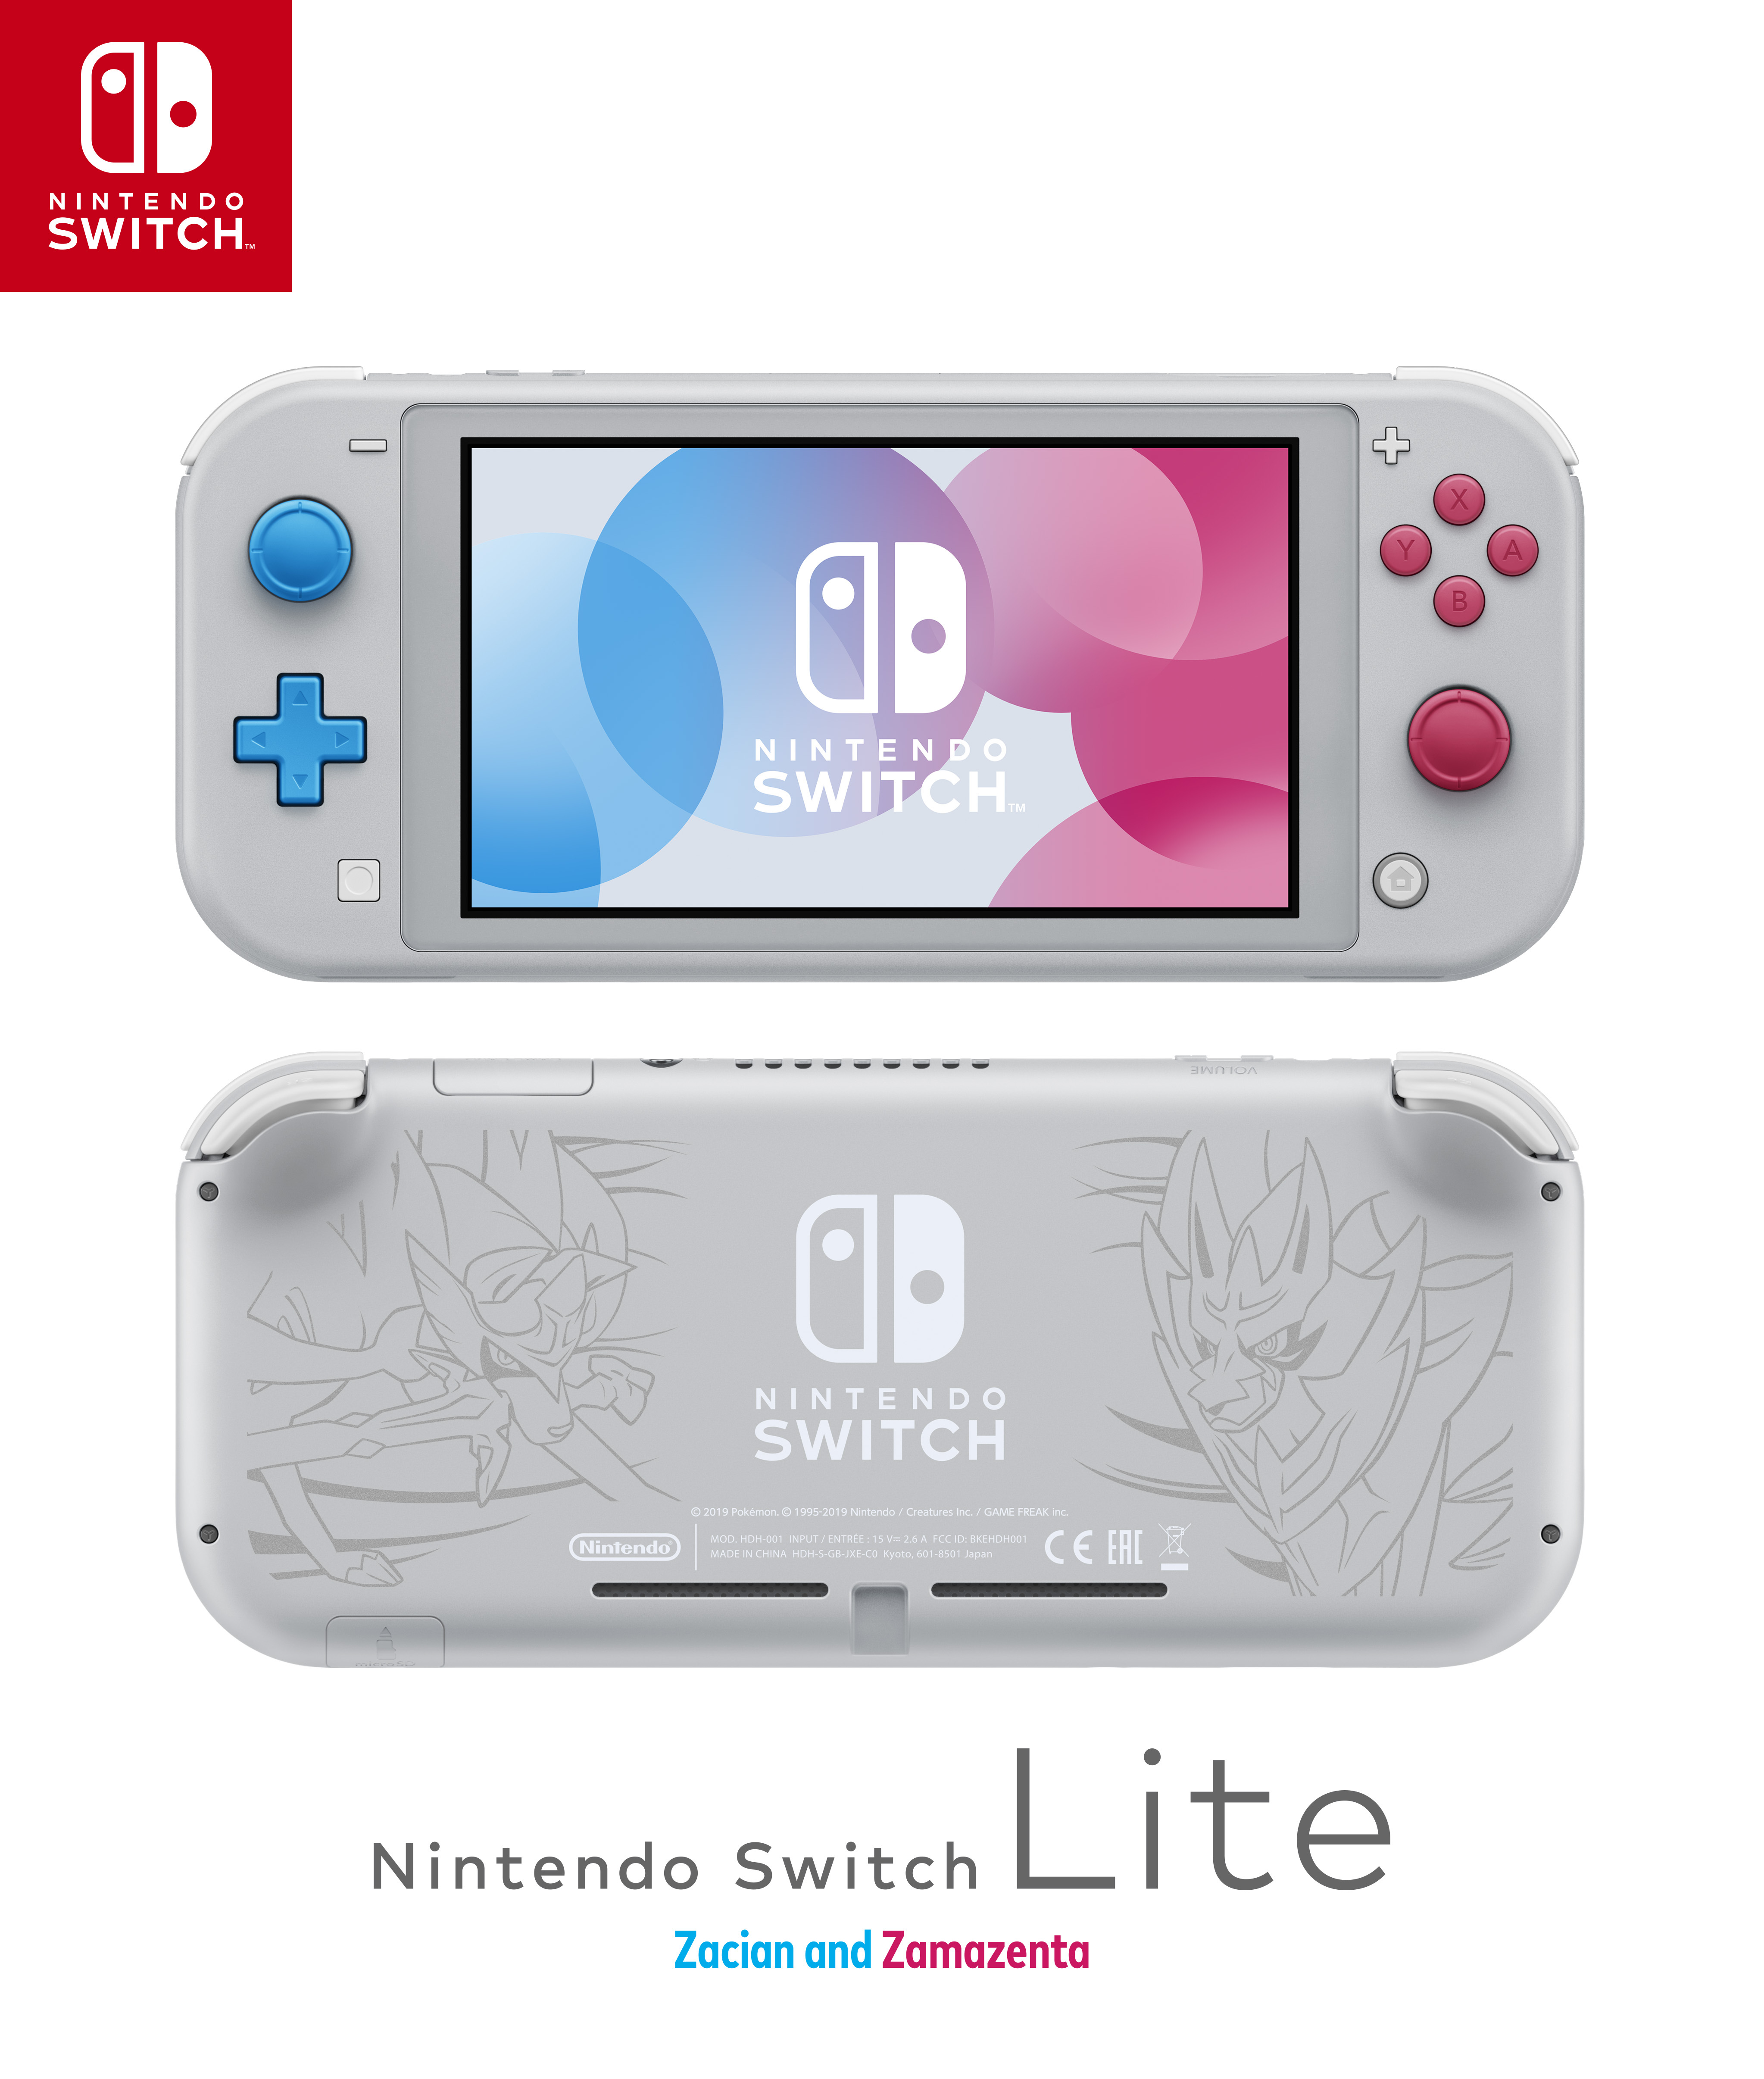 Nintendo Switch Lite ‘Zacian and Zamazenta Edition’ announced